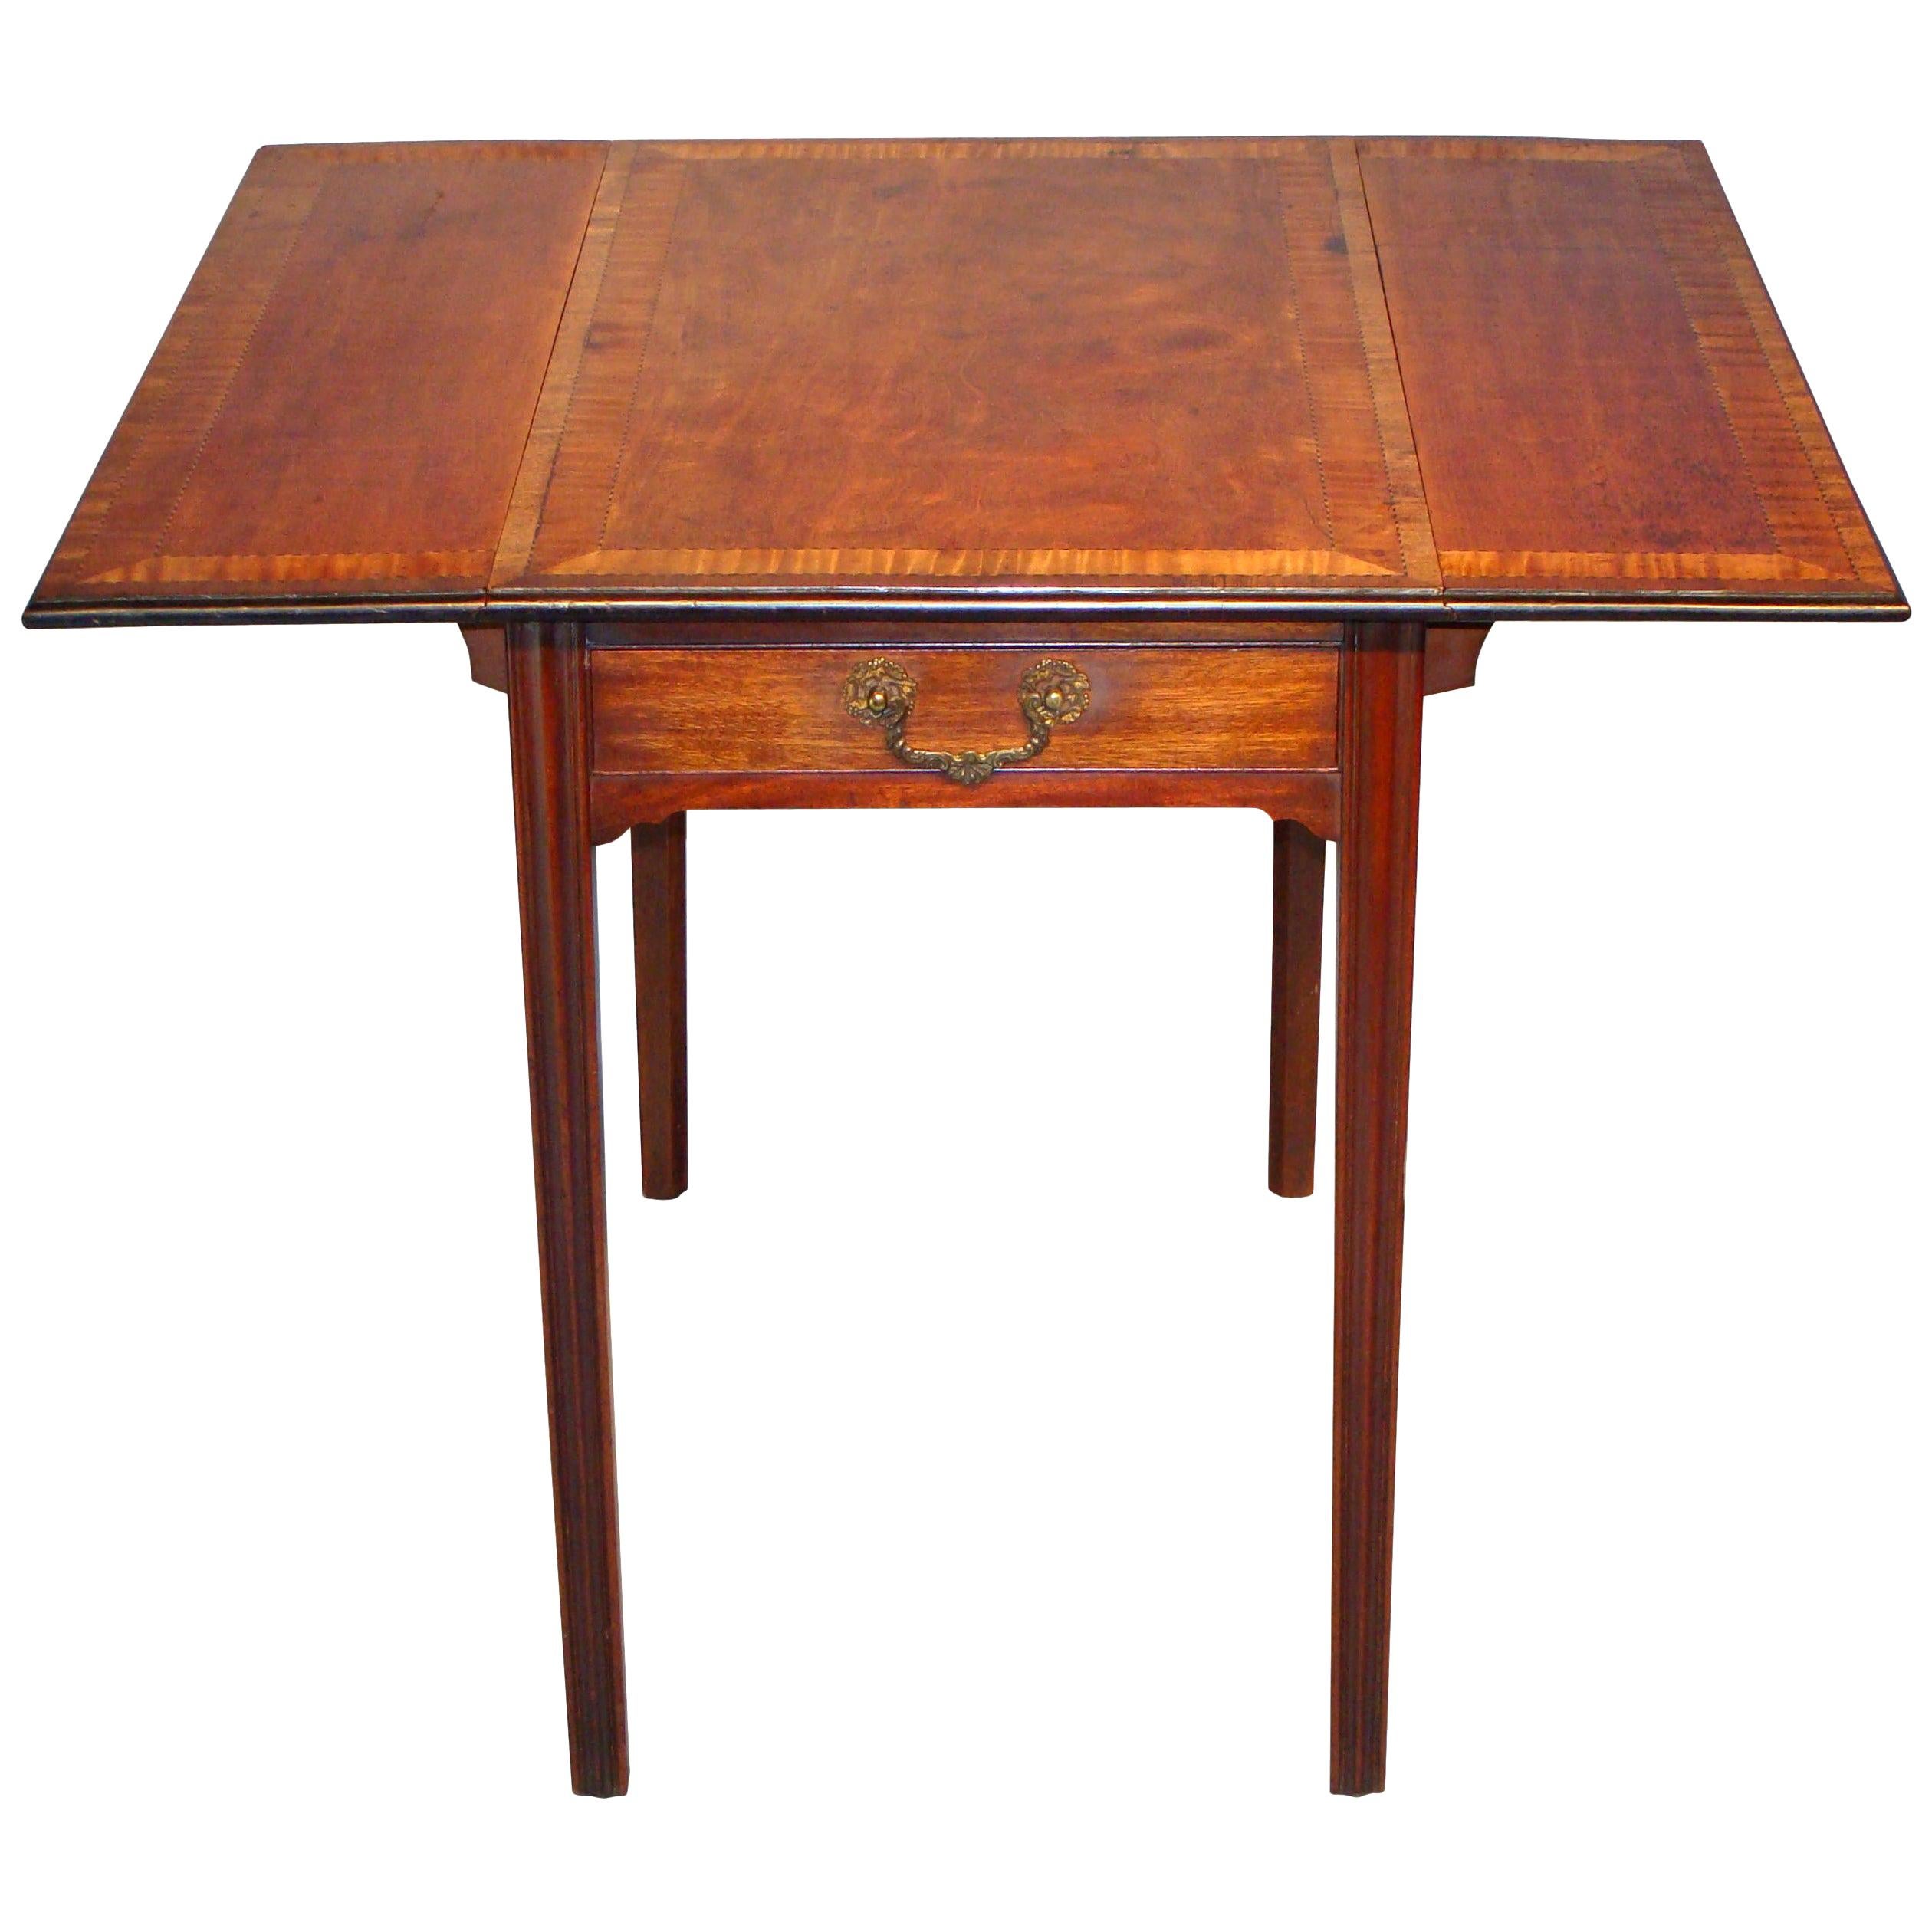 George III Period Satinwood Pembroke Table For Sale